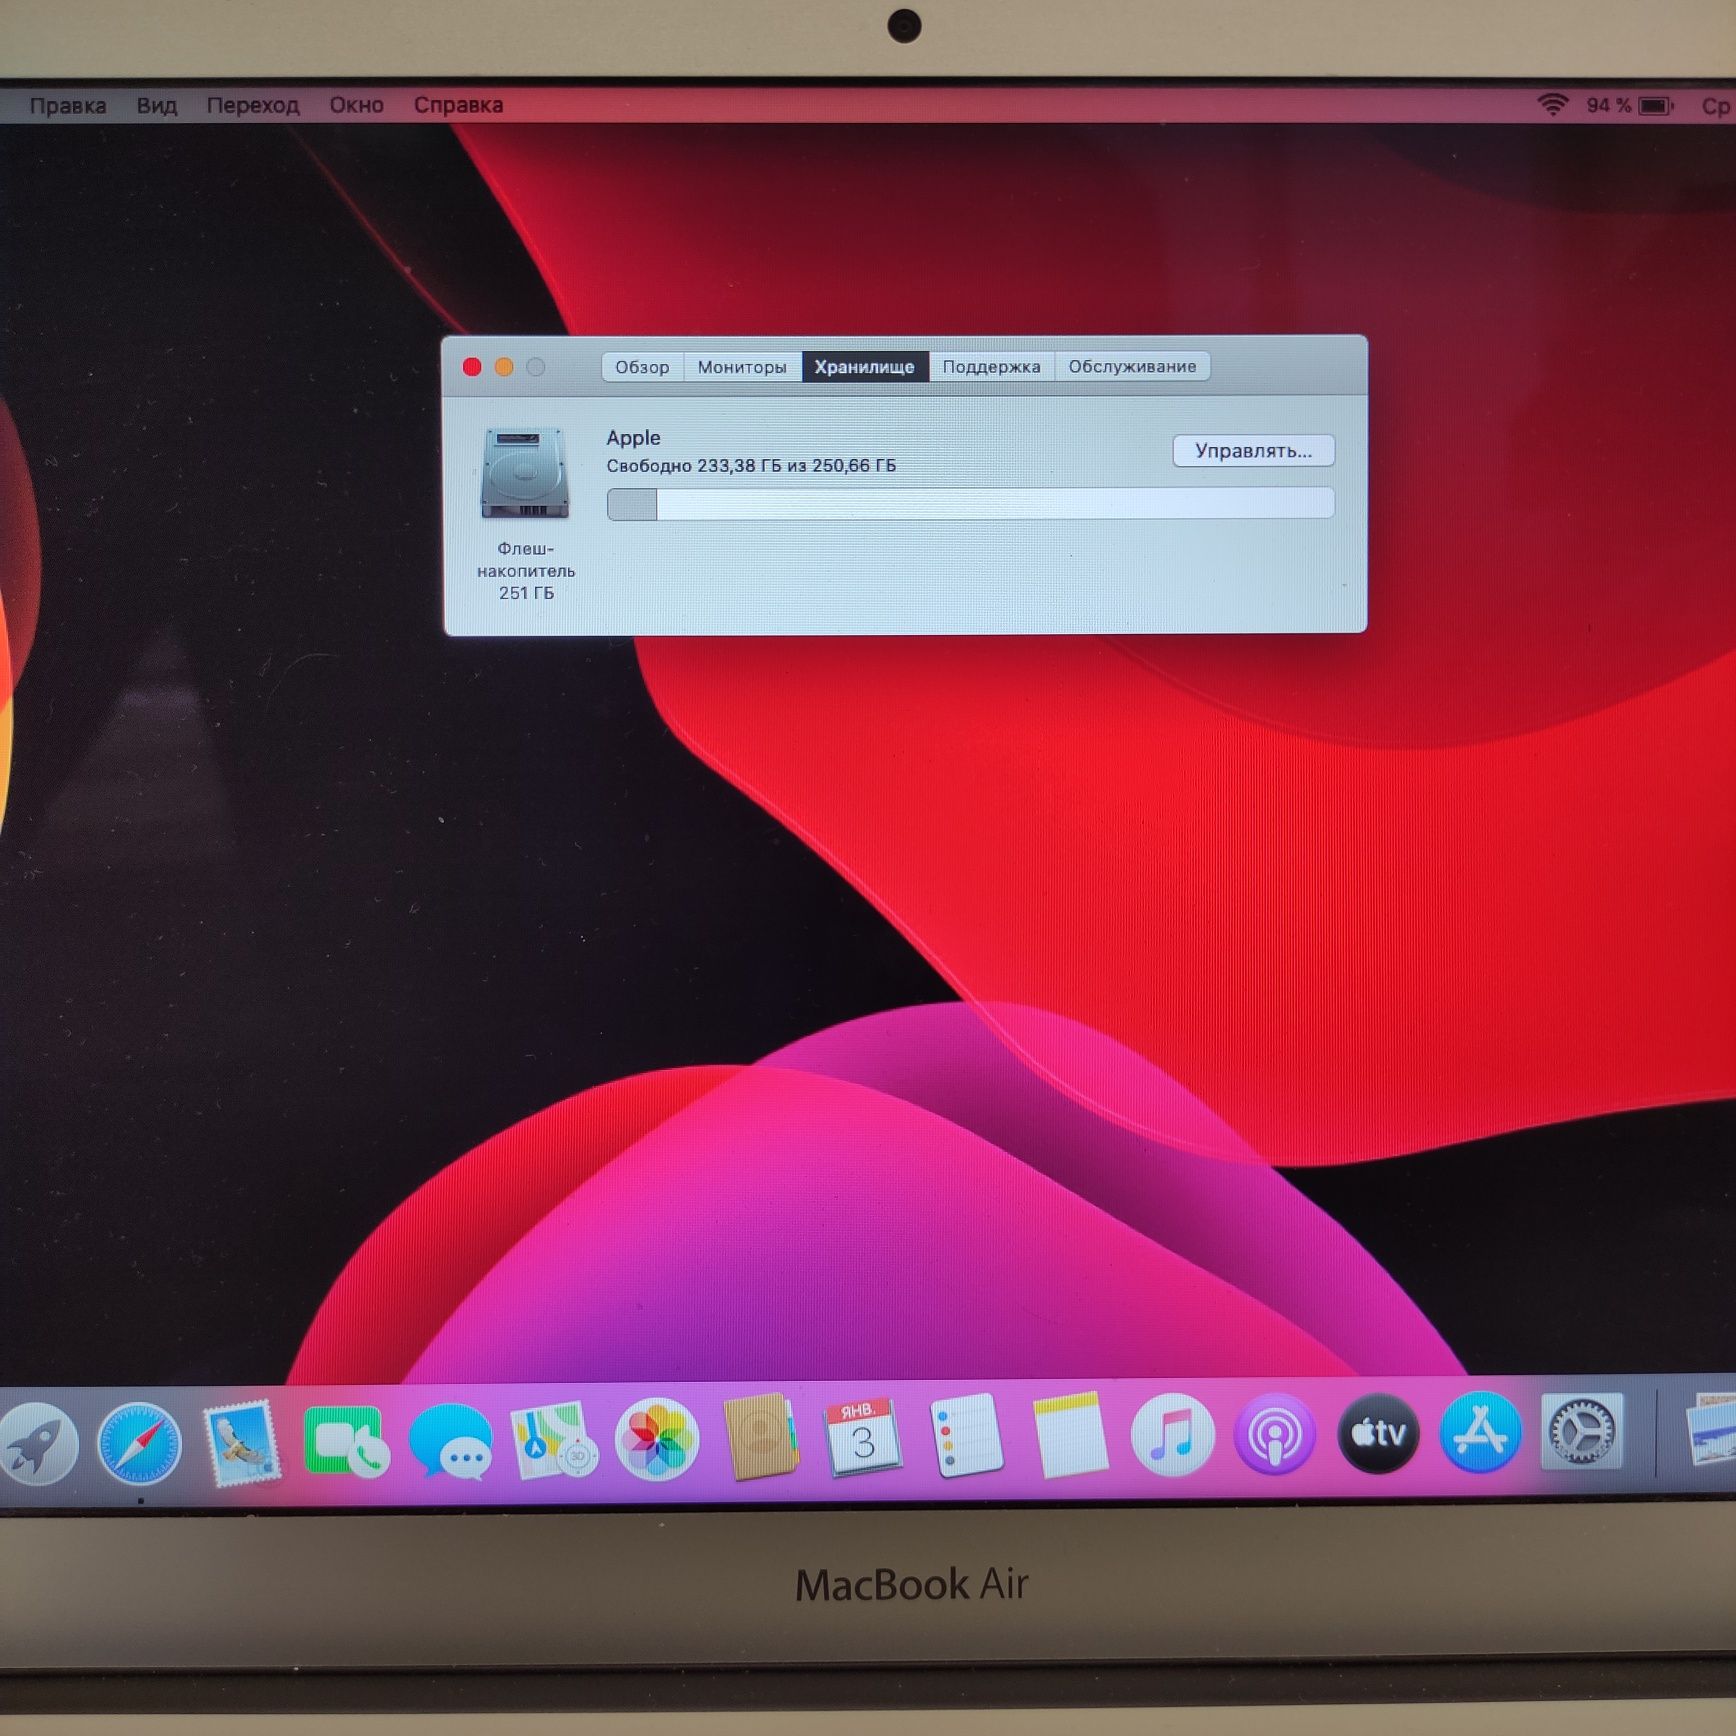 MacBook Air SSD-256GB/ОЗУ-4ГБ/Блок питания, мышка! •